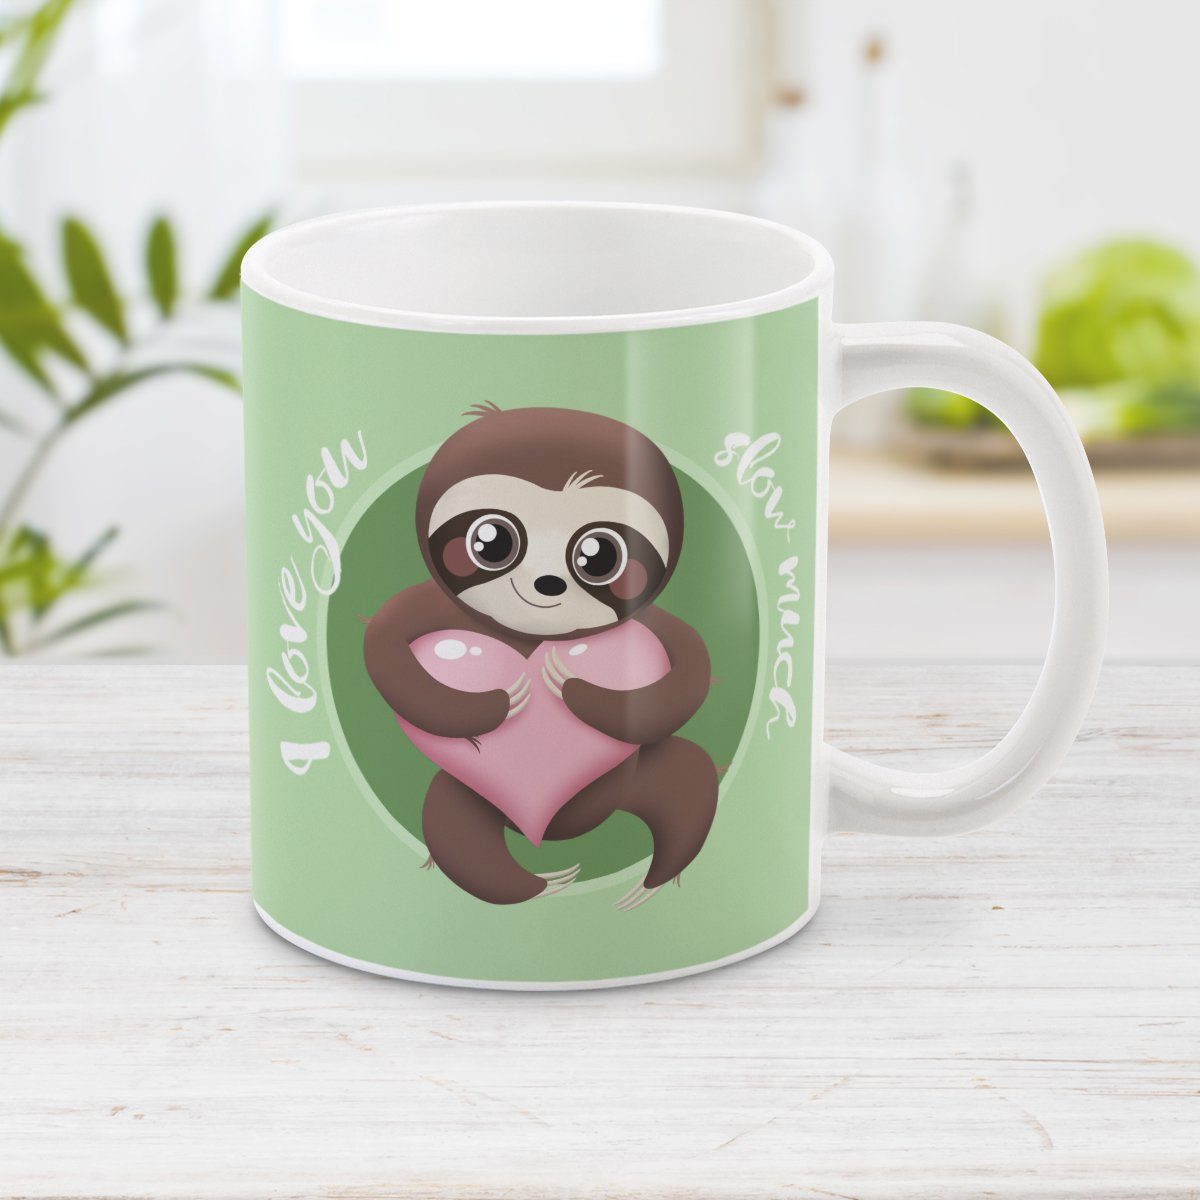 I Love You Slow Much - Cute Sloth Mug at Amy's Coffee Mugs